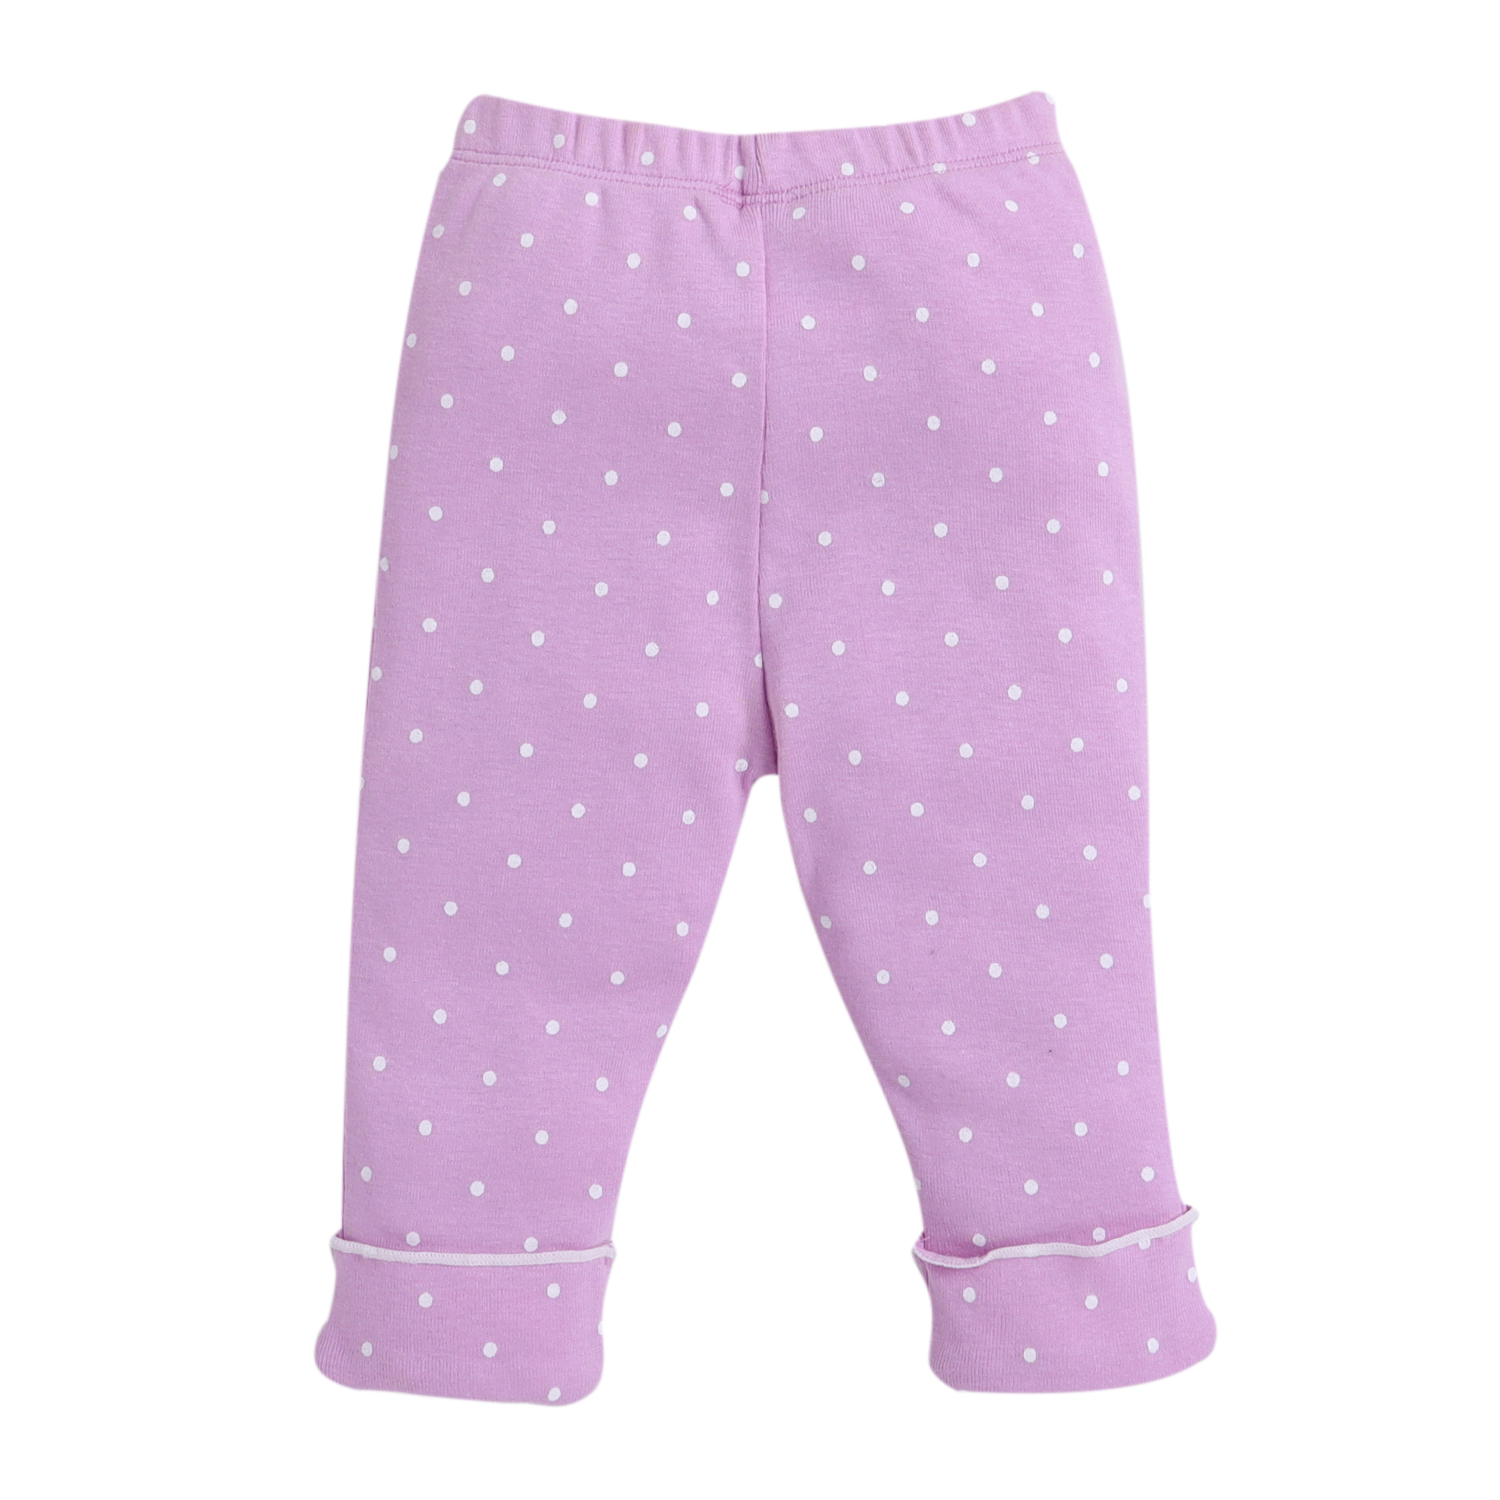 Quedoris Girls Leggings Size 130 Pink & Blue Paint Splatter Design Stretchy  Soft | eBay